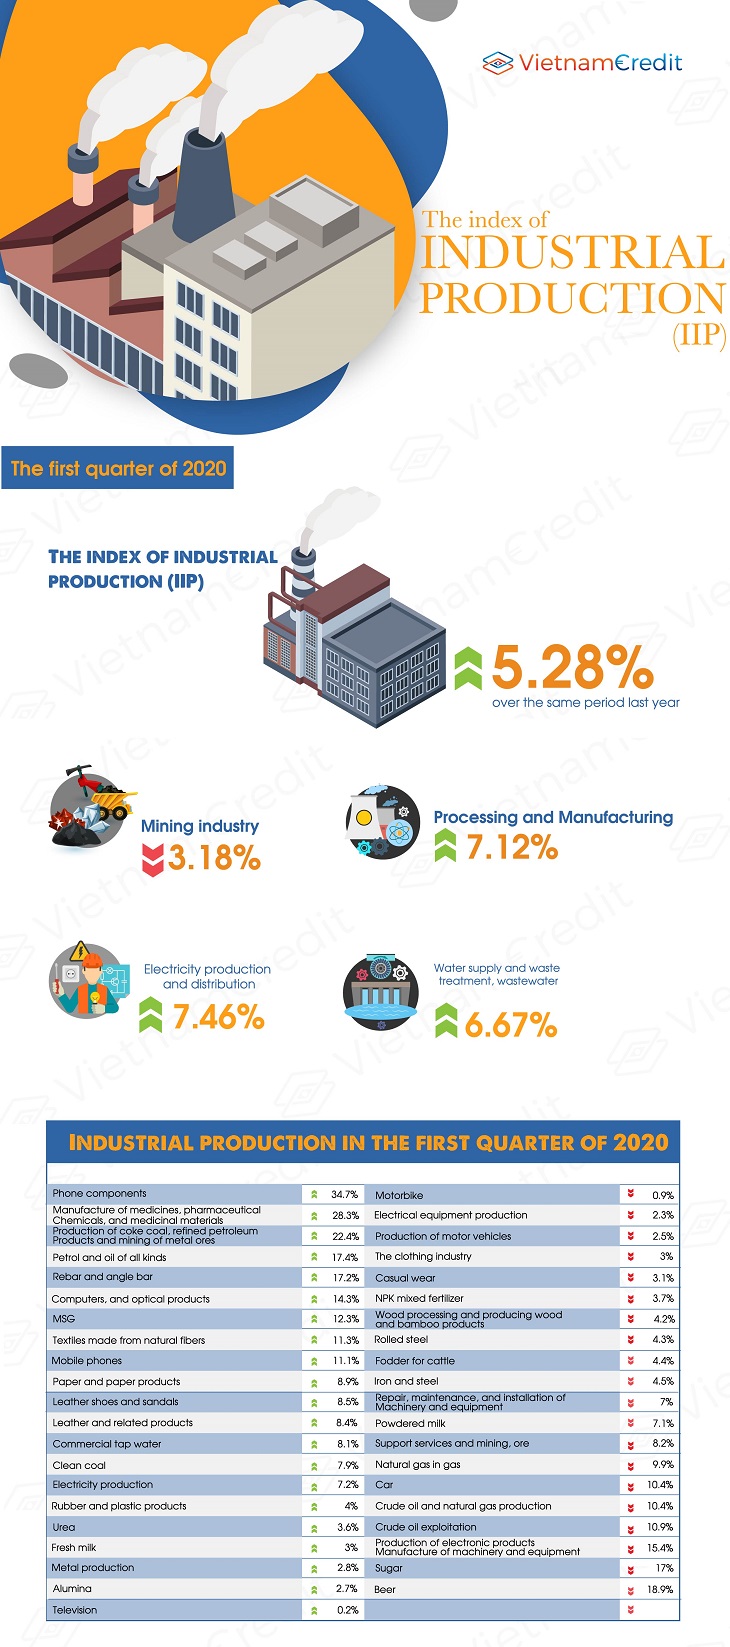 Index of Industrial Production (IIP) 